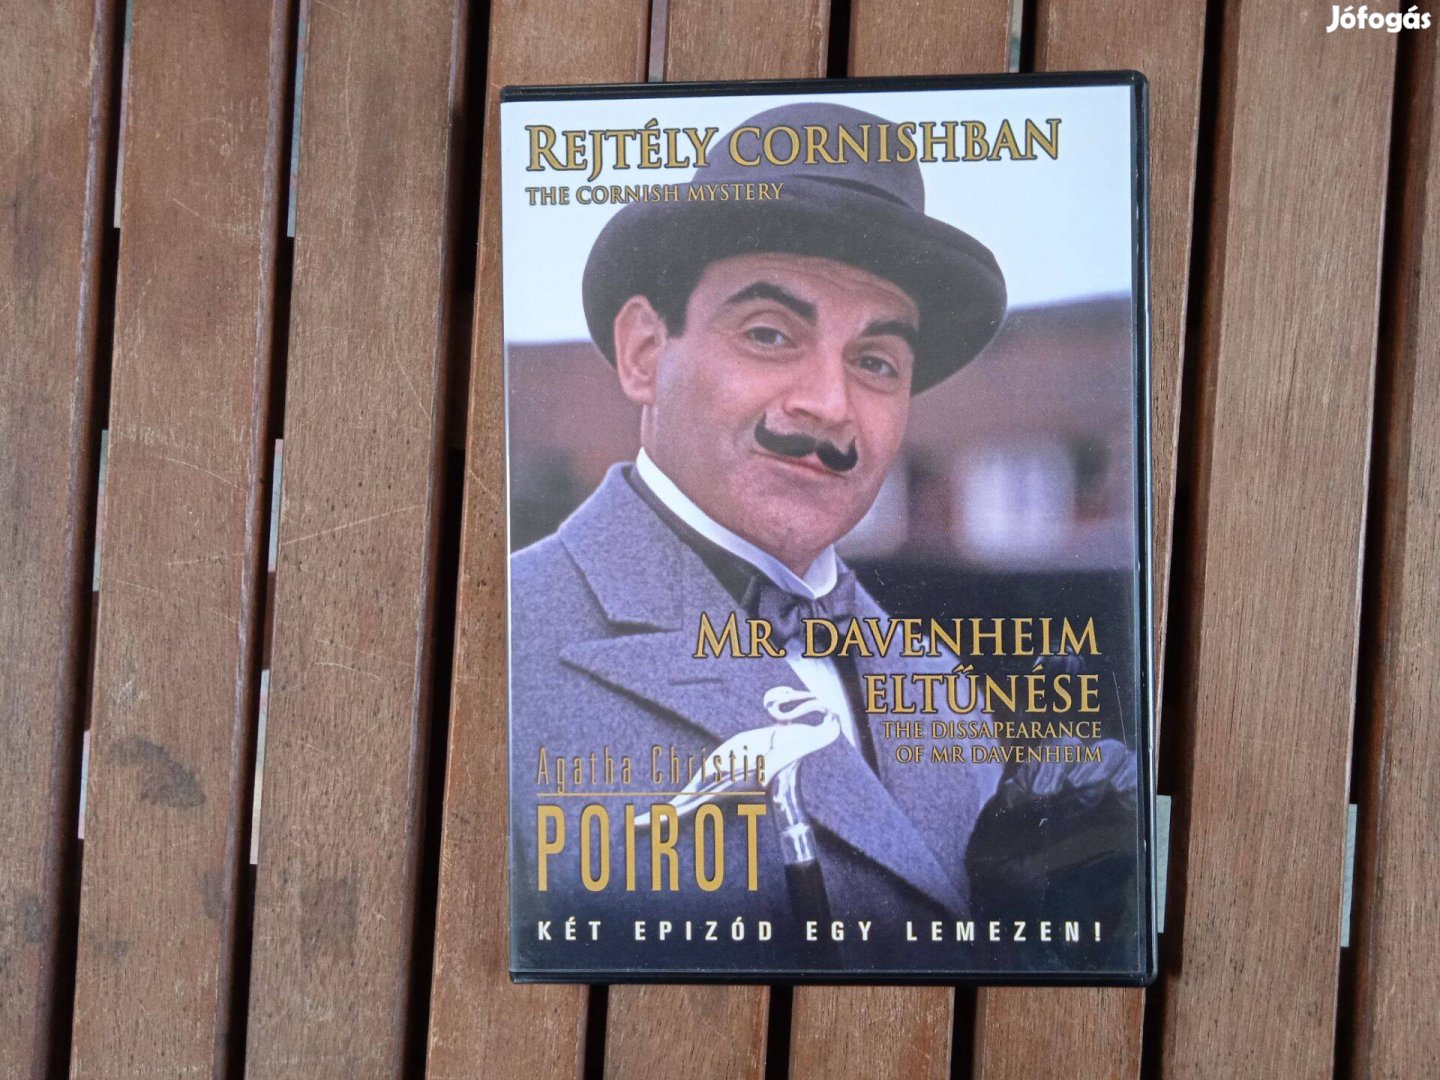 Poirot: Rejtély Cornishban / Mr. Davenheim eltűnése - eredeti DVD